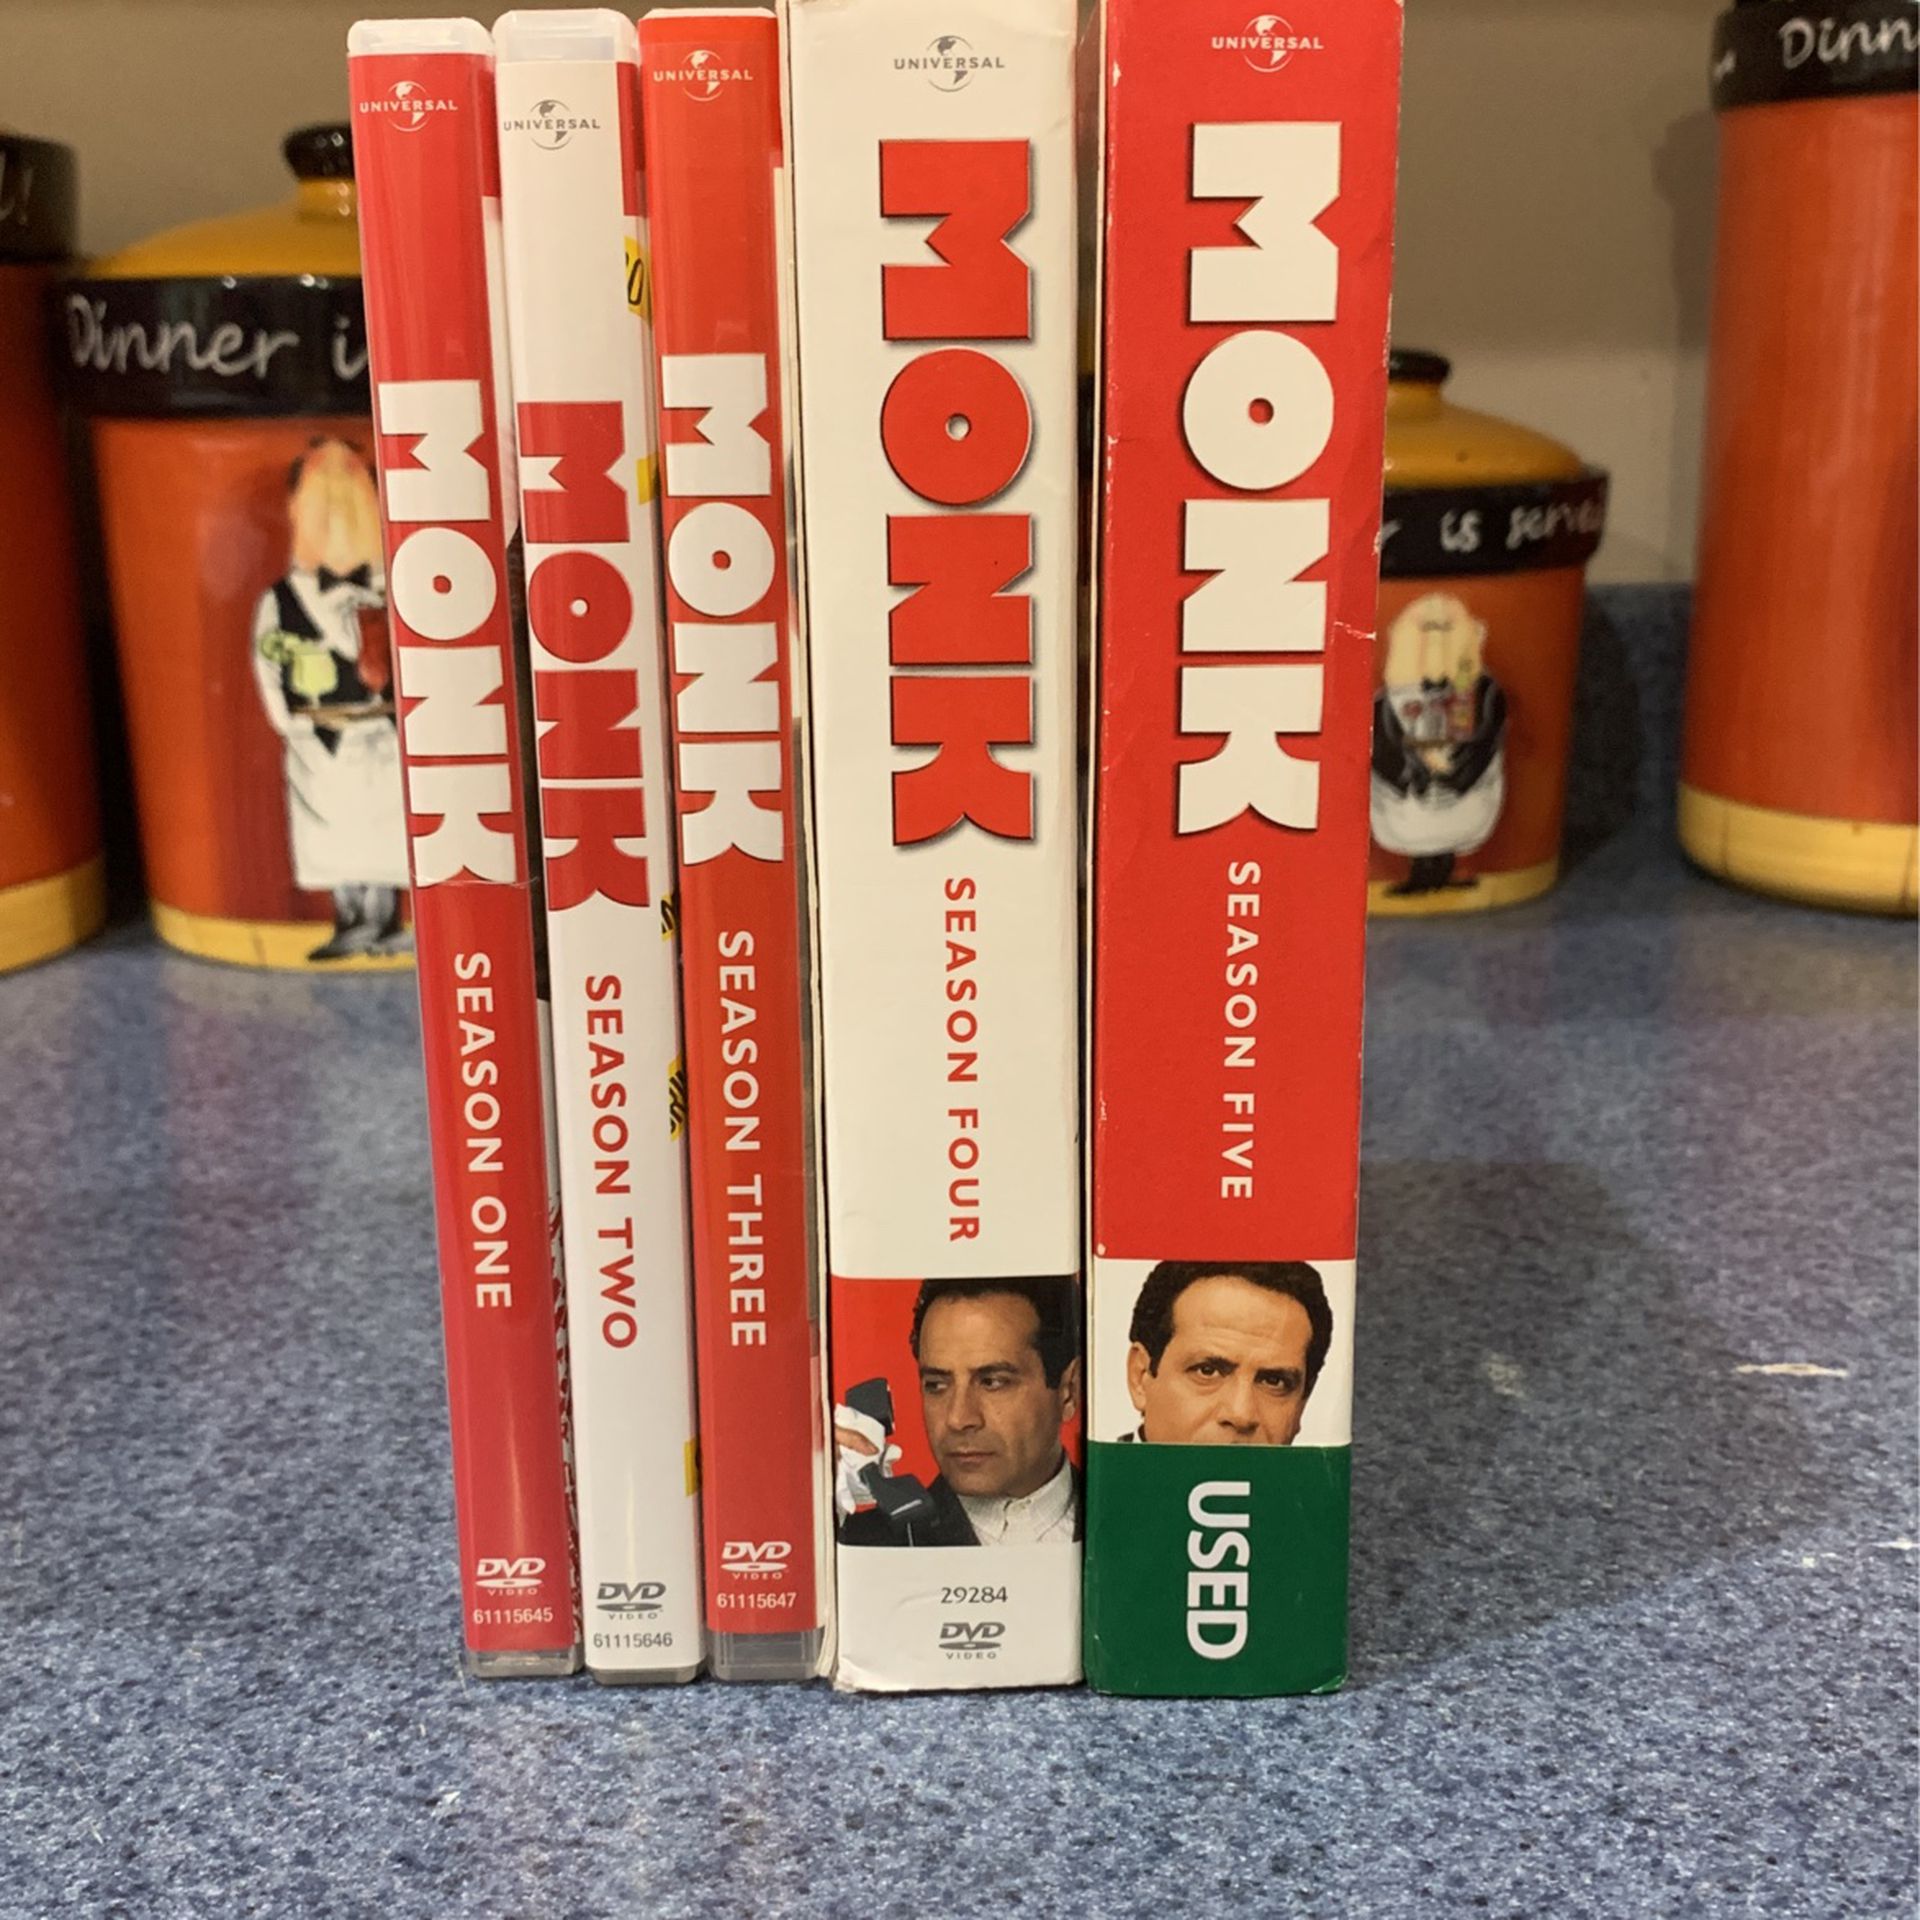 Monk DVD Seasons 1-5